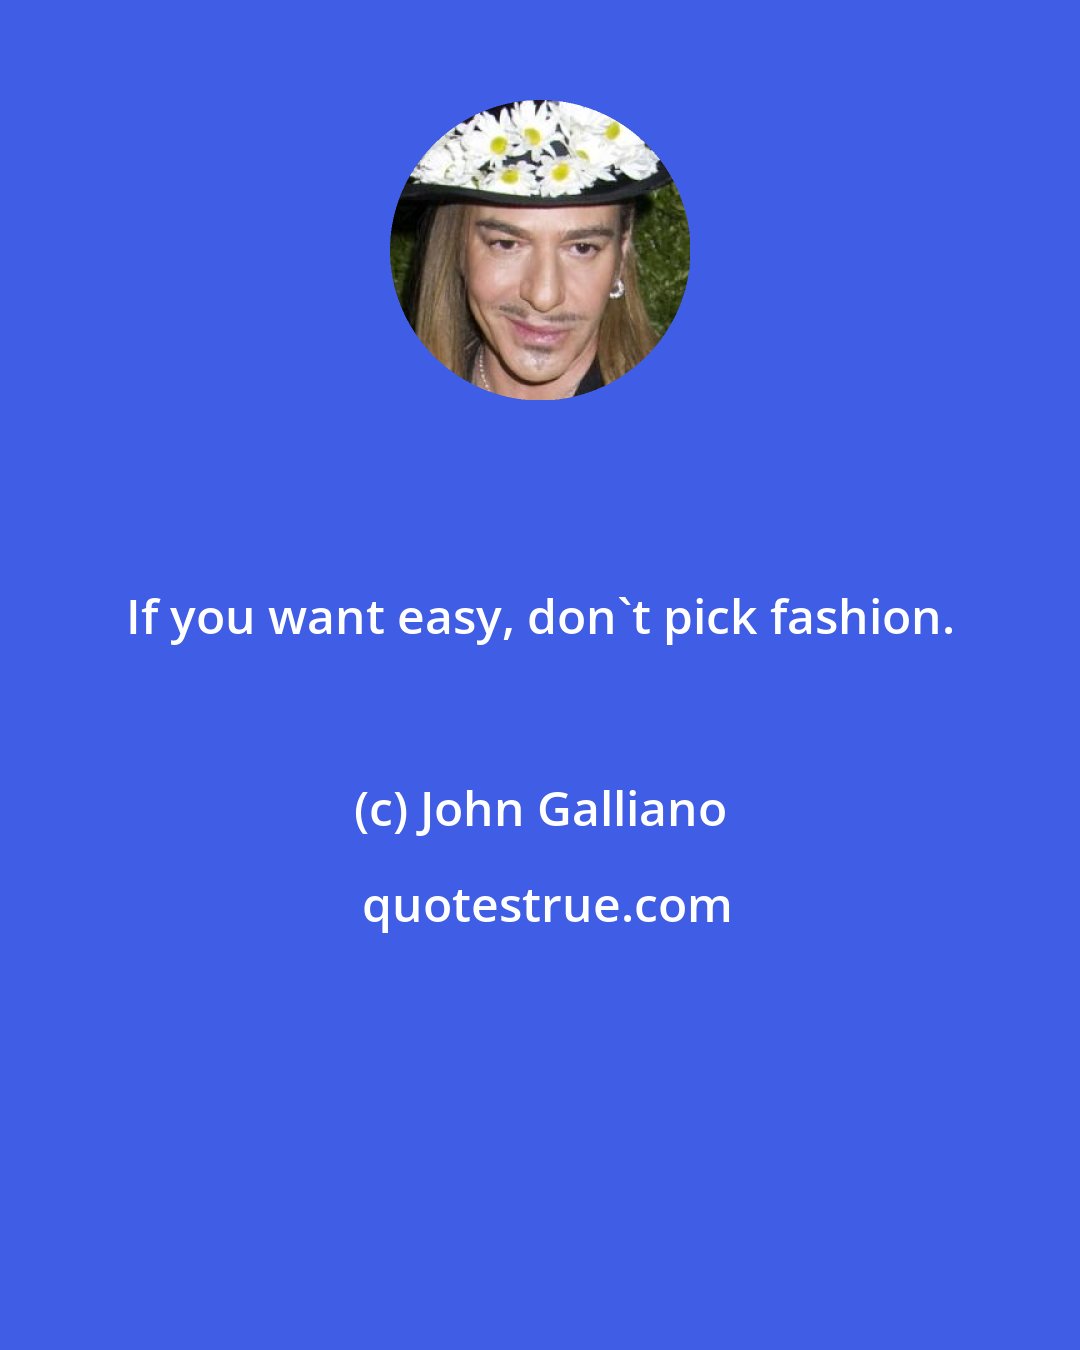 John Galliano: If you want easy, don't pick fashion.